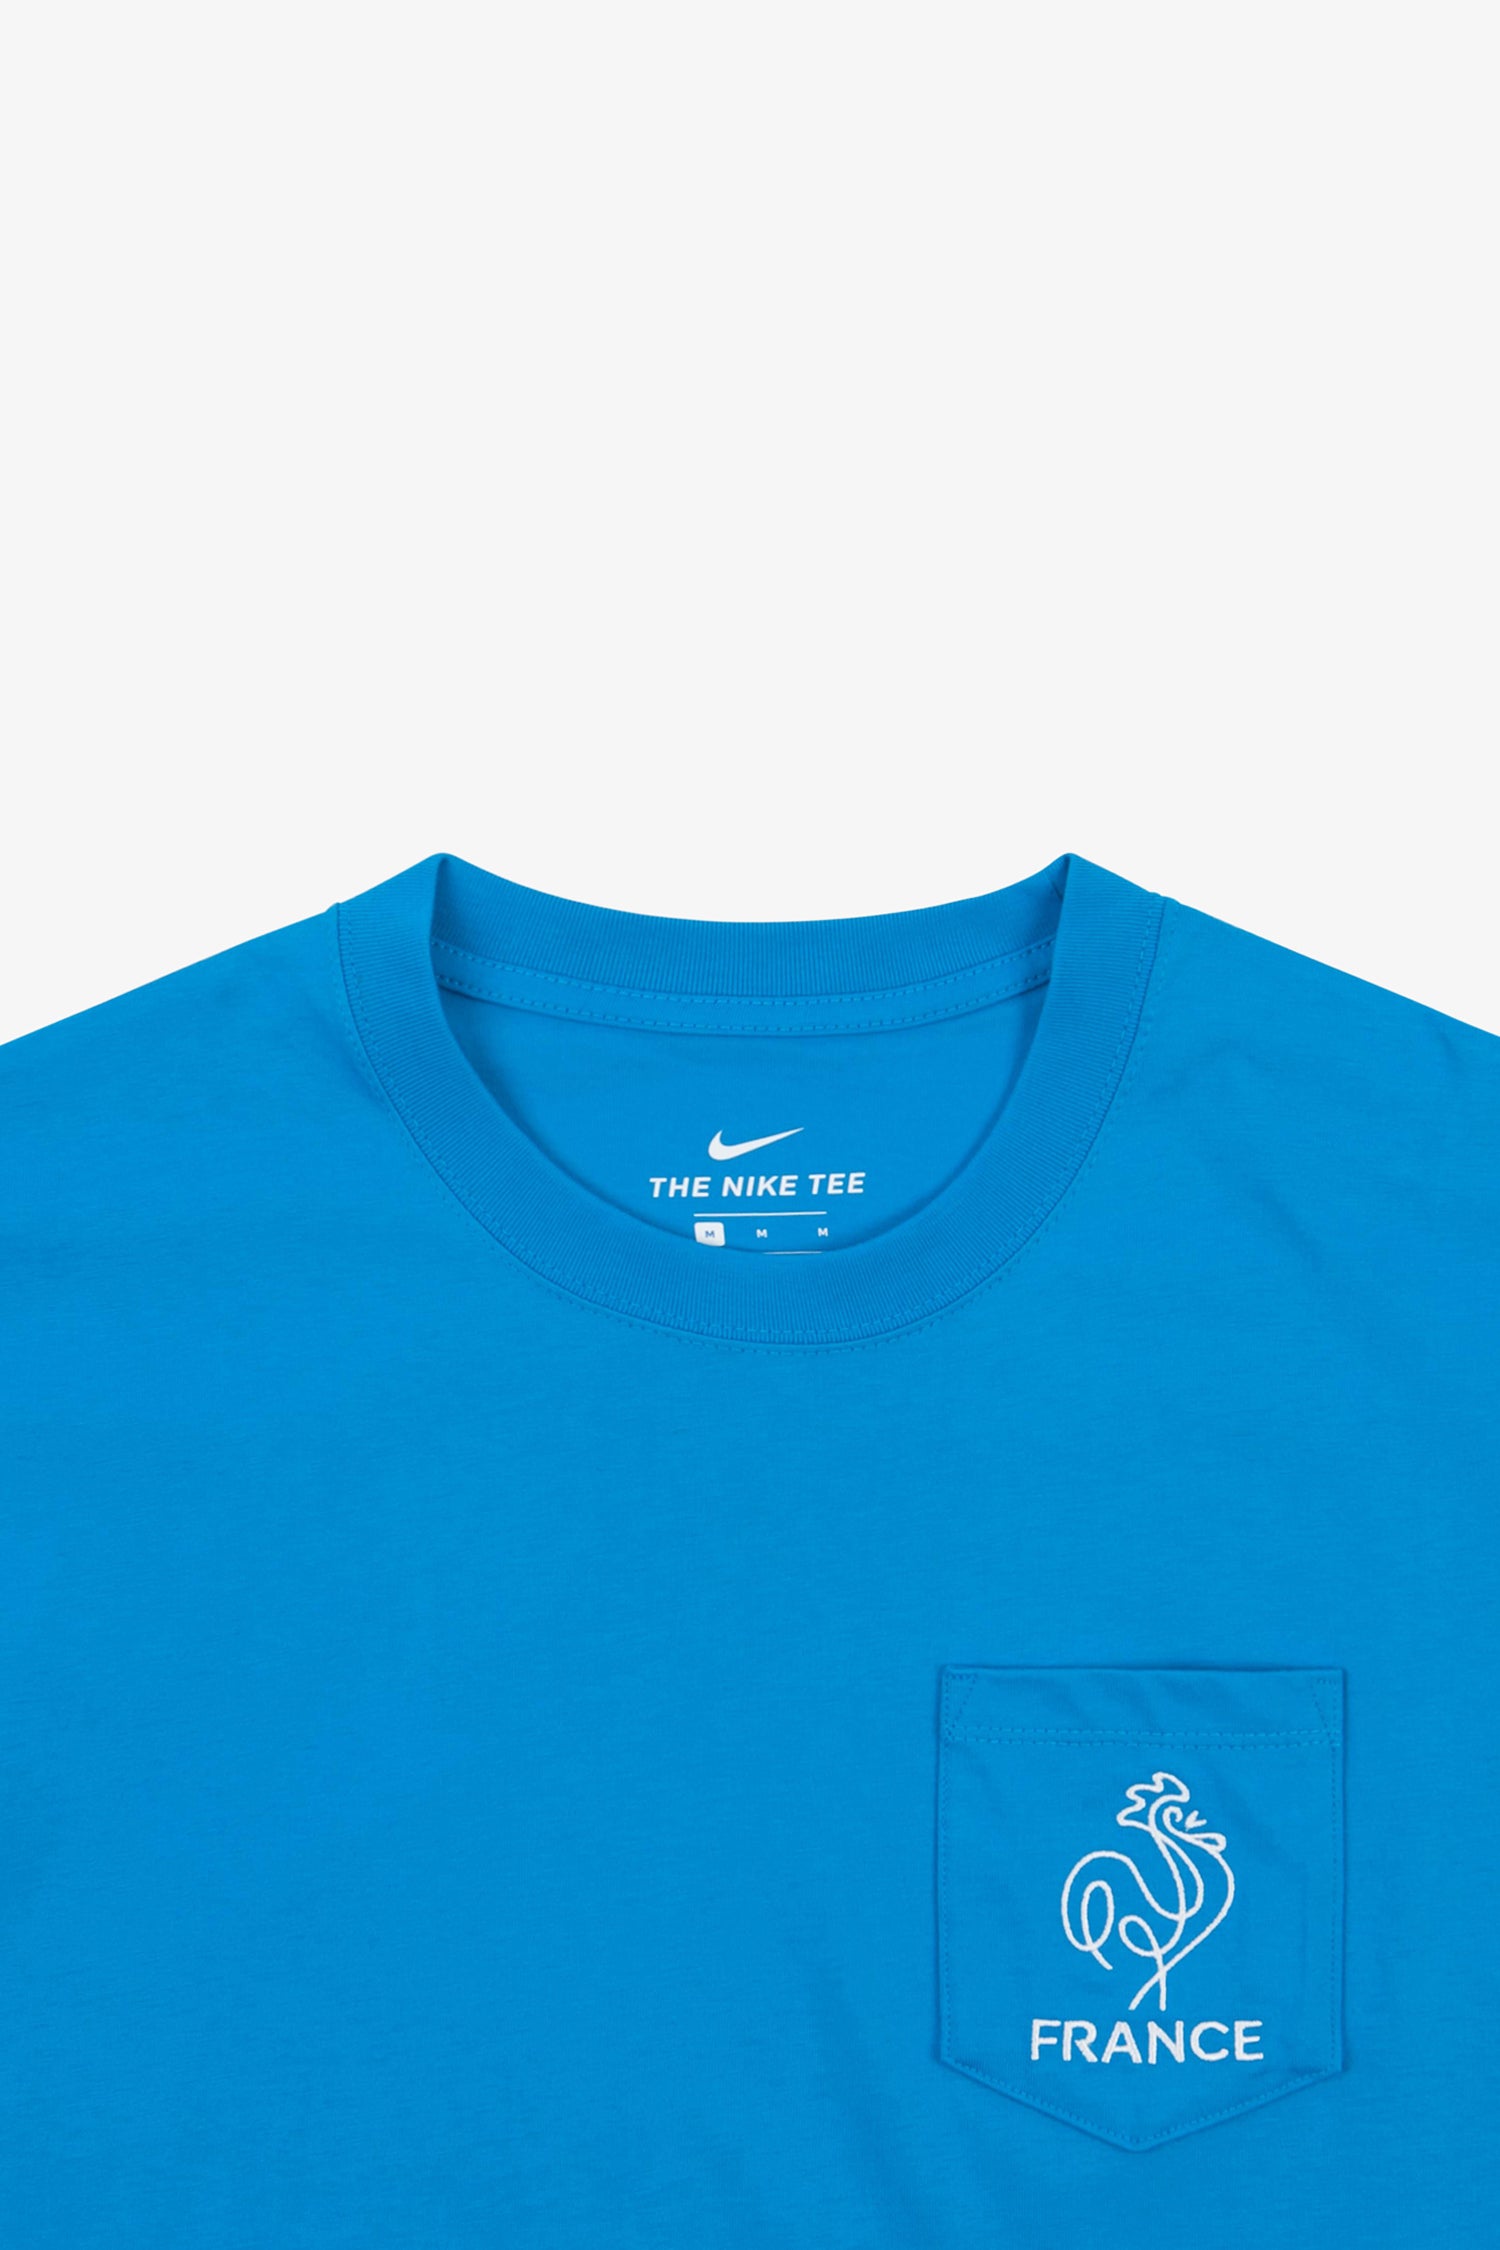 Selectshop FRAME - NIKE SB Team FRN Tee Parra T-Shirts Dubai